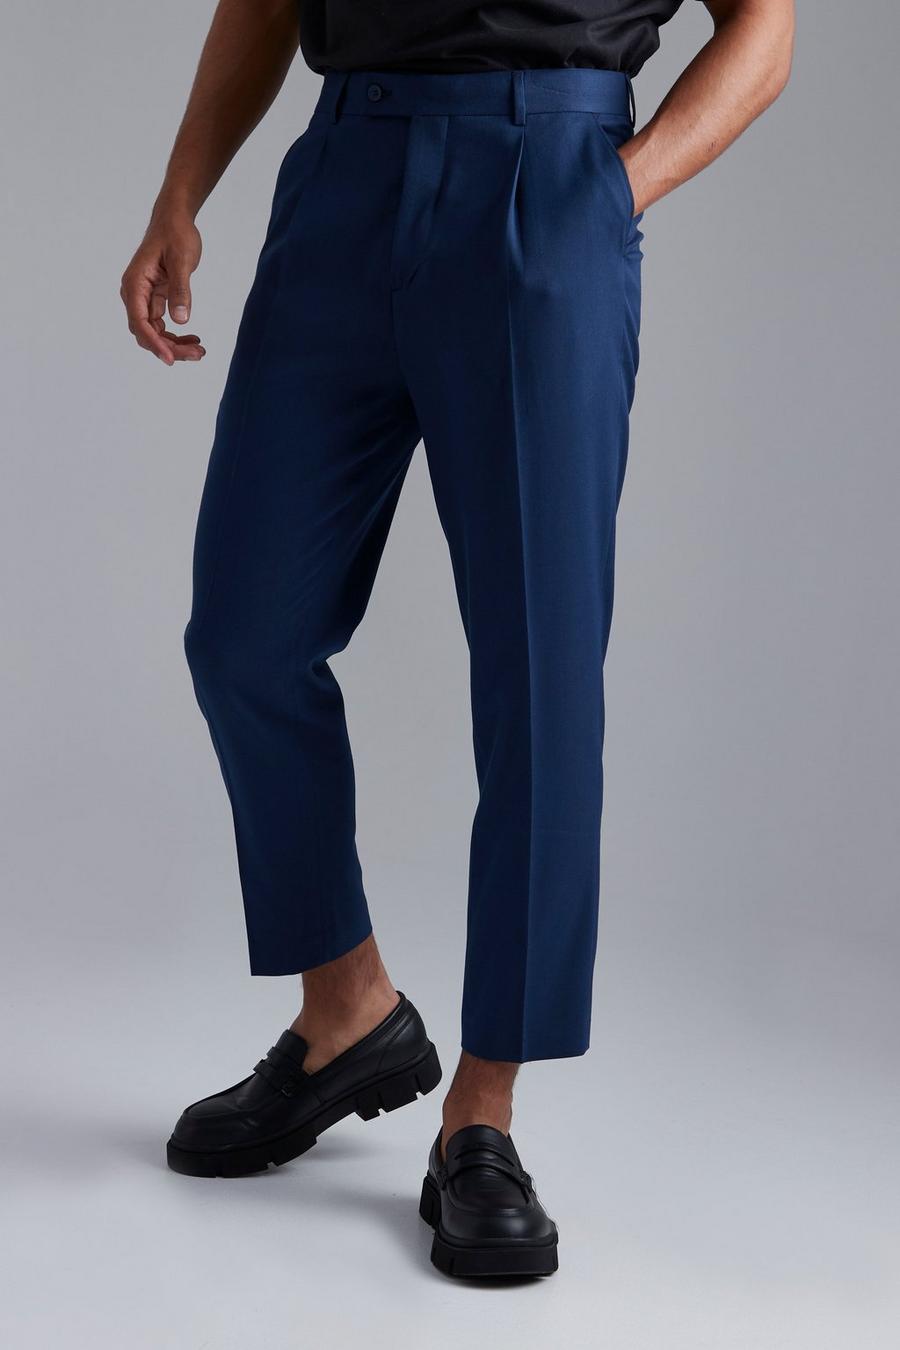 Pantaloni affusolati in Stretch super comodi, Navy azul marino